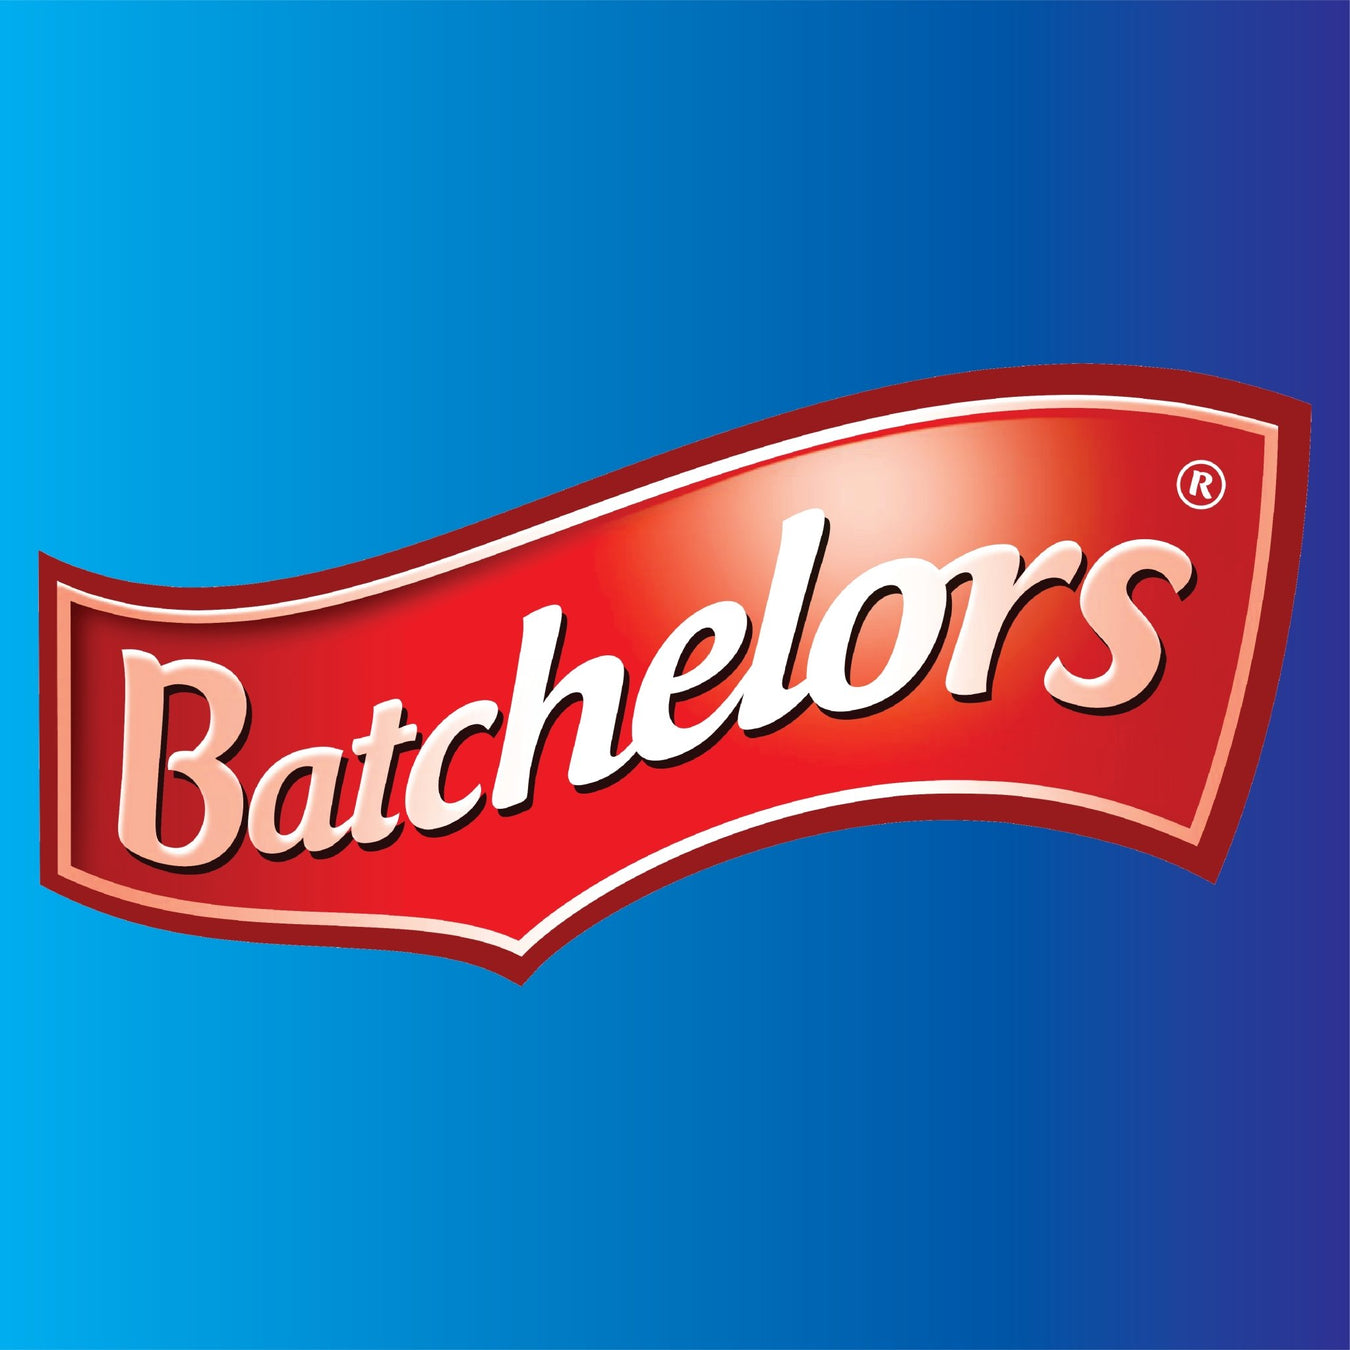 Batchelors - The Great British Shop